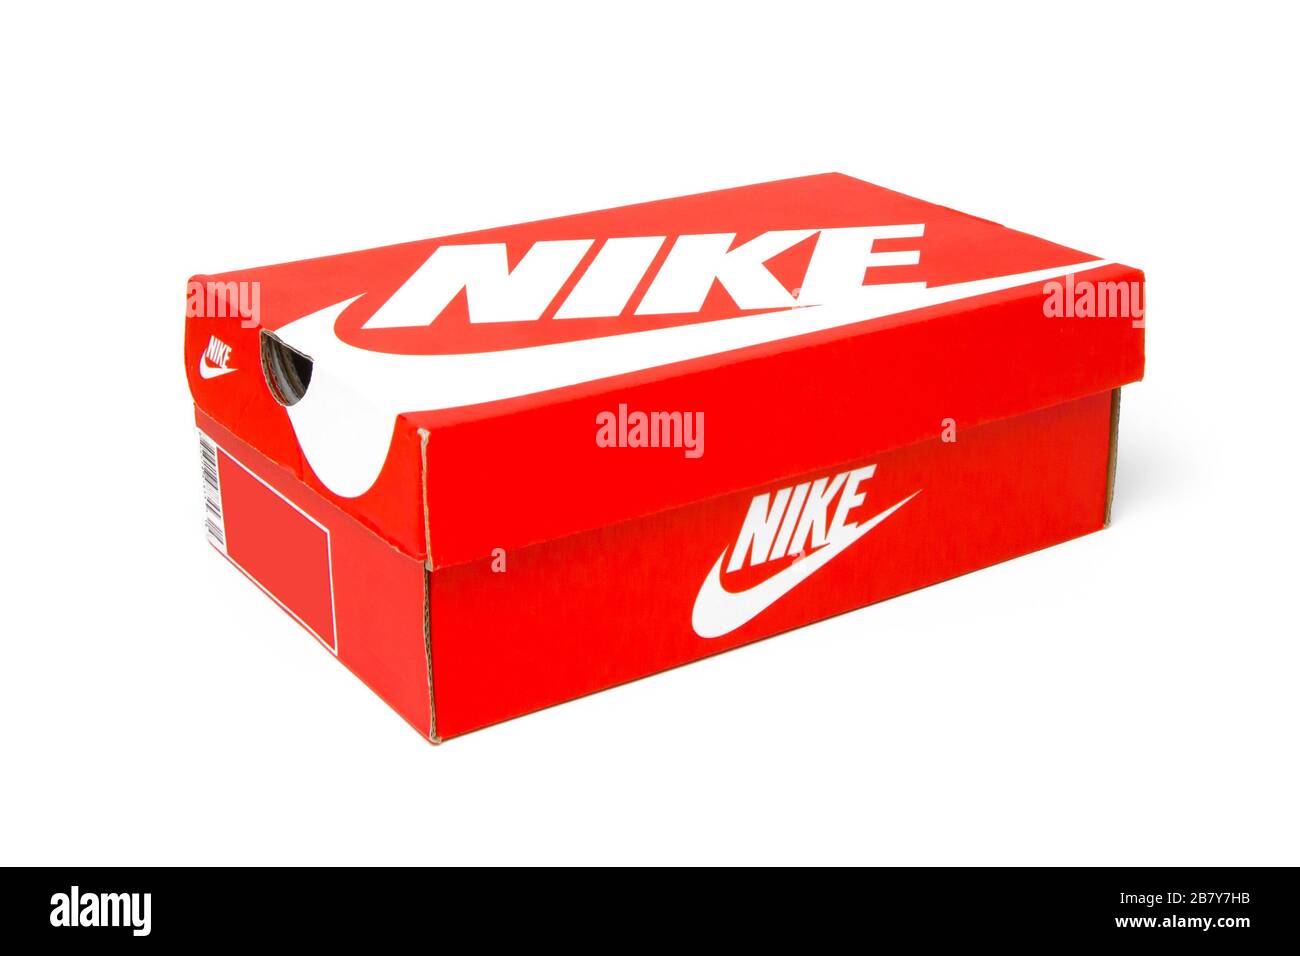 Nike schuhkarton -Fotos und -Bildmaterial in hoher Auflösung – Alamy